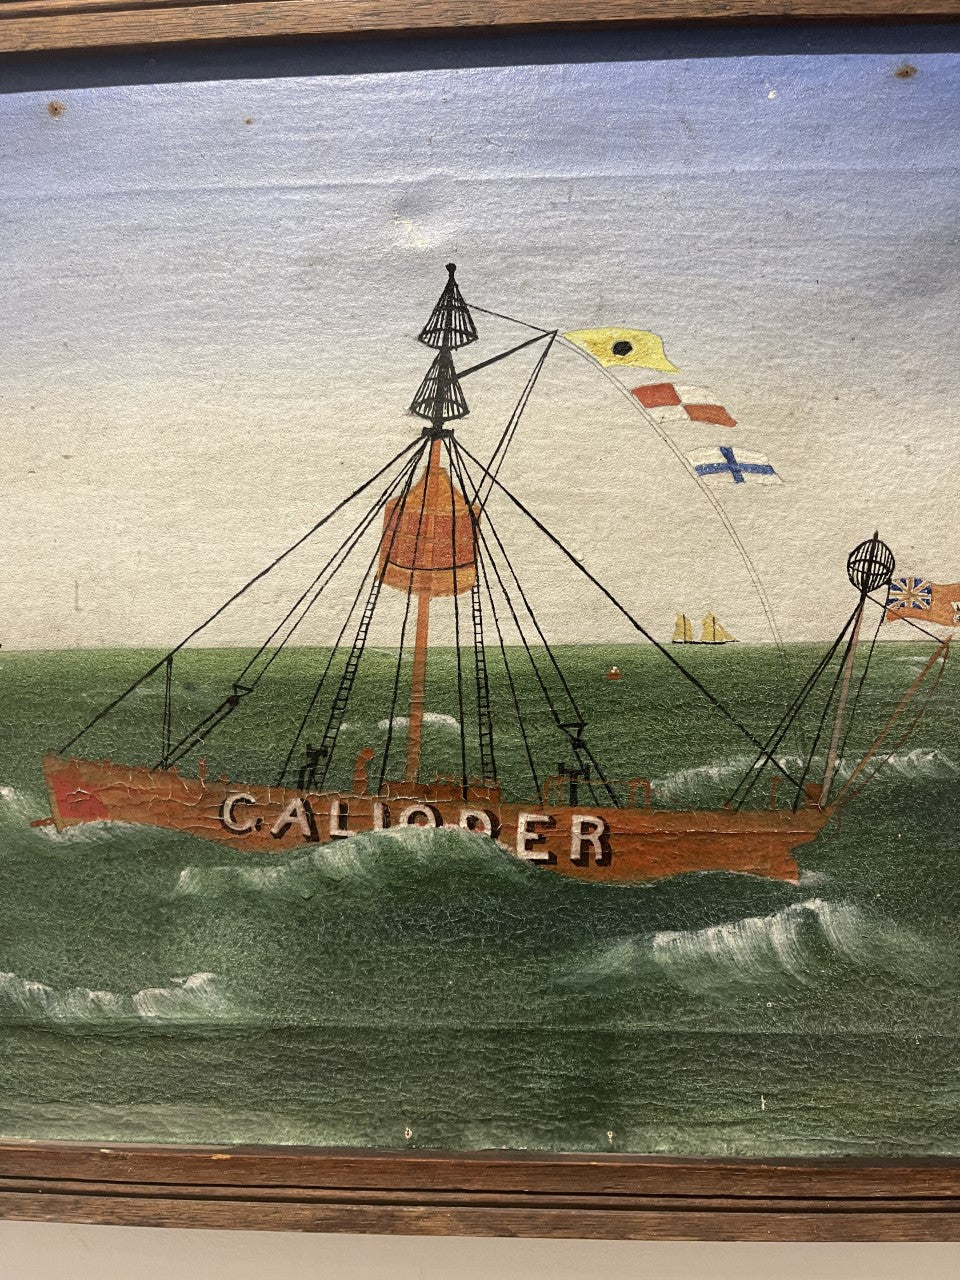 Early 20th century Primitive Oil on Canvas Seascape - Light Ship Galloper.